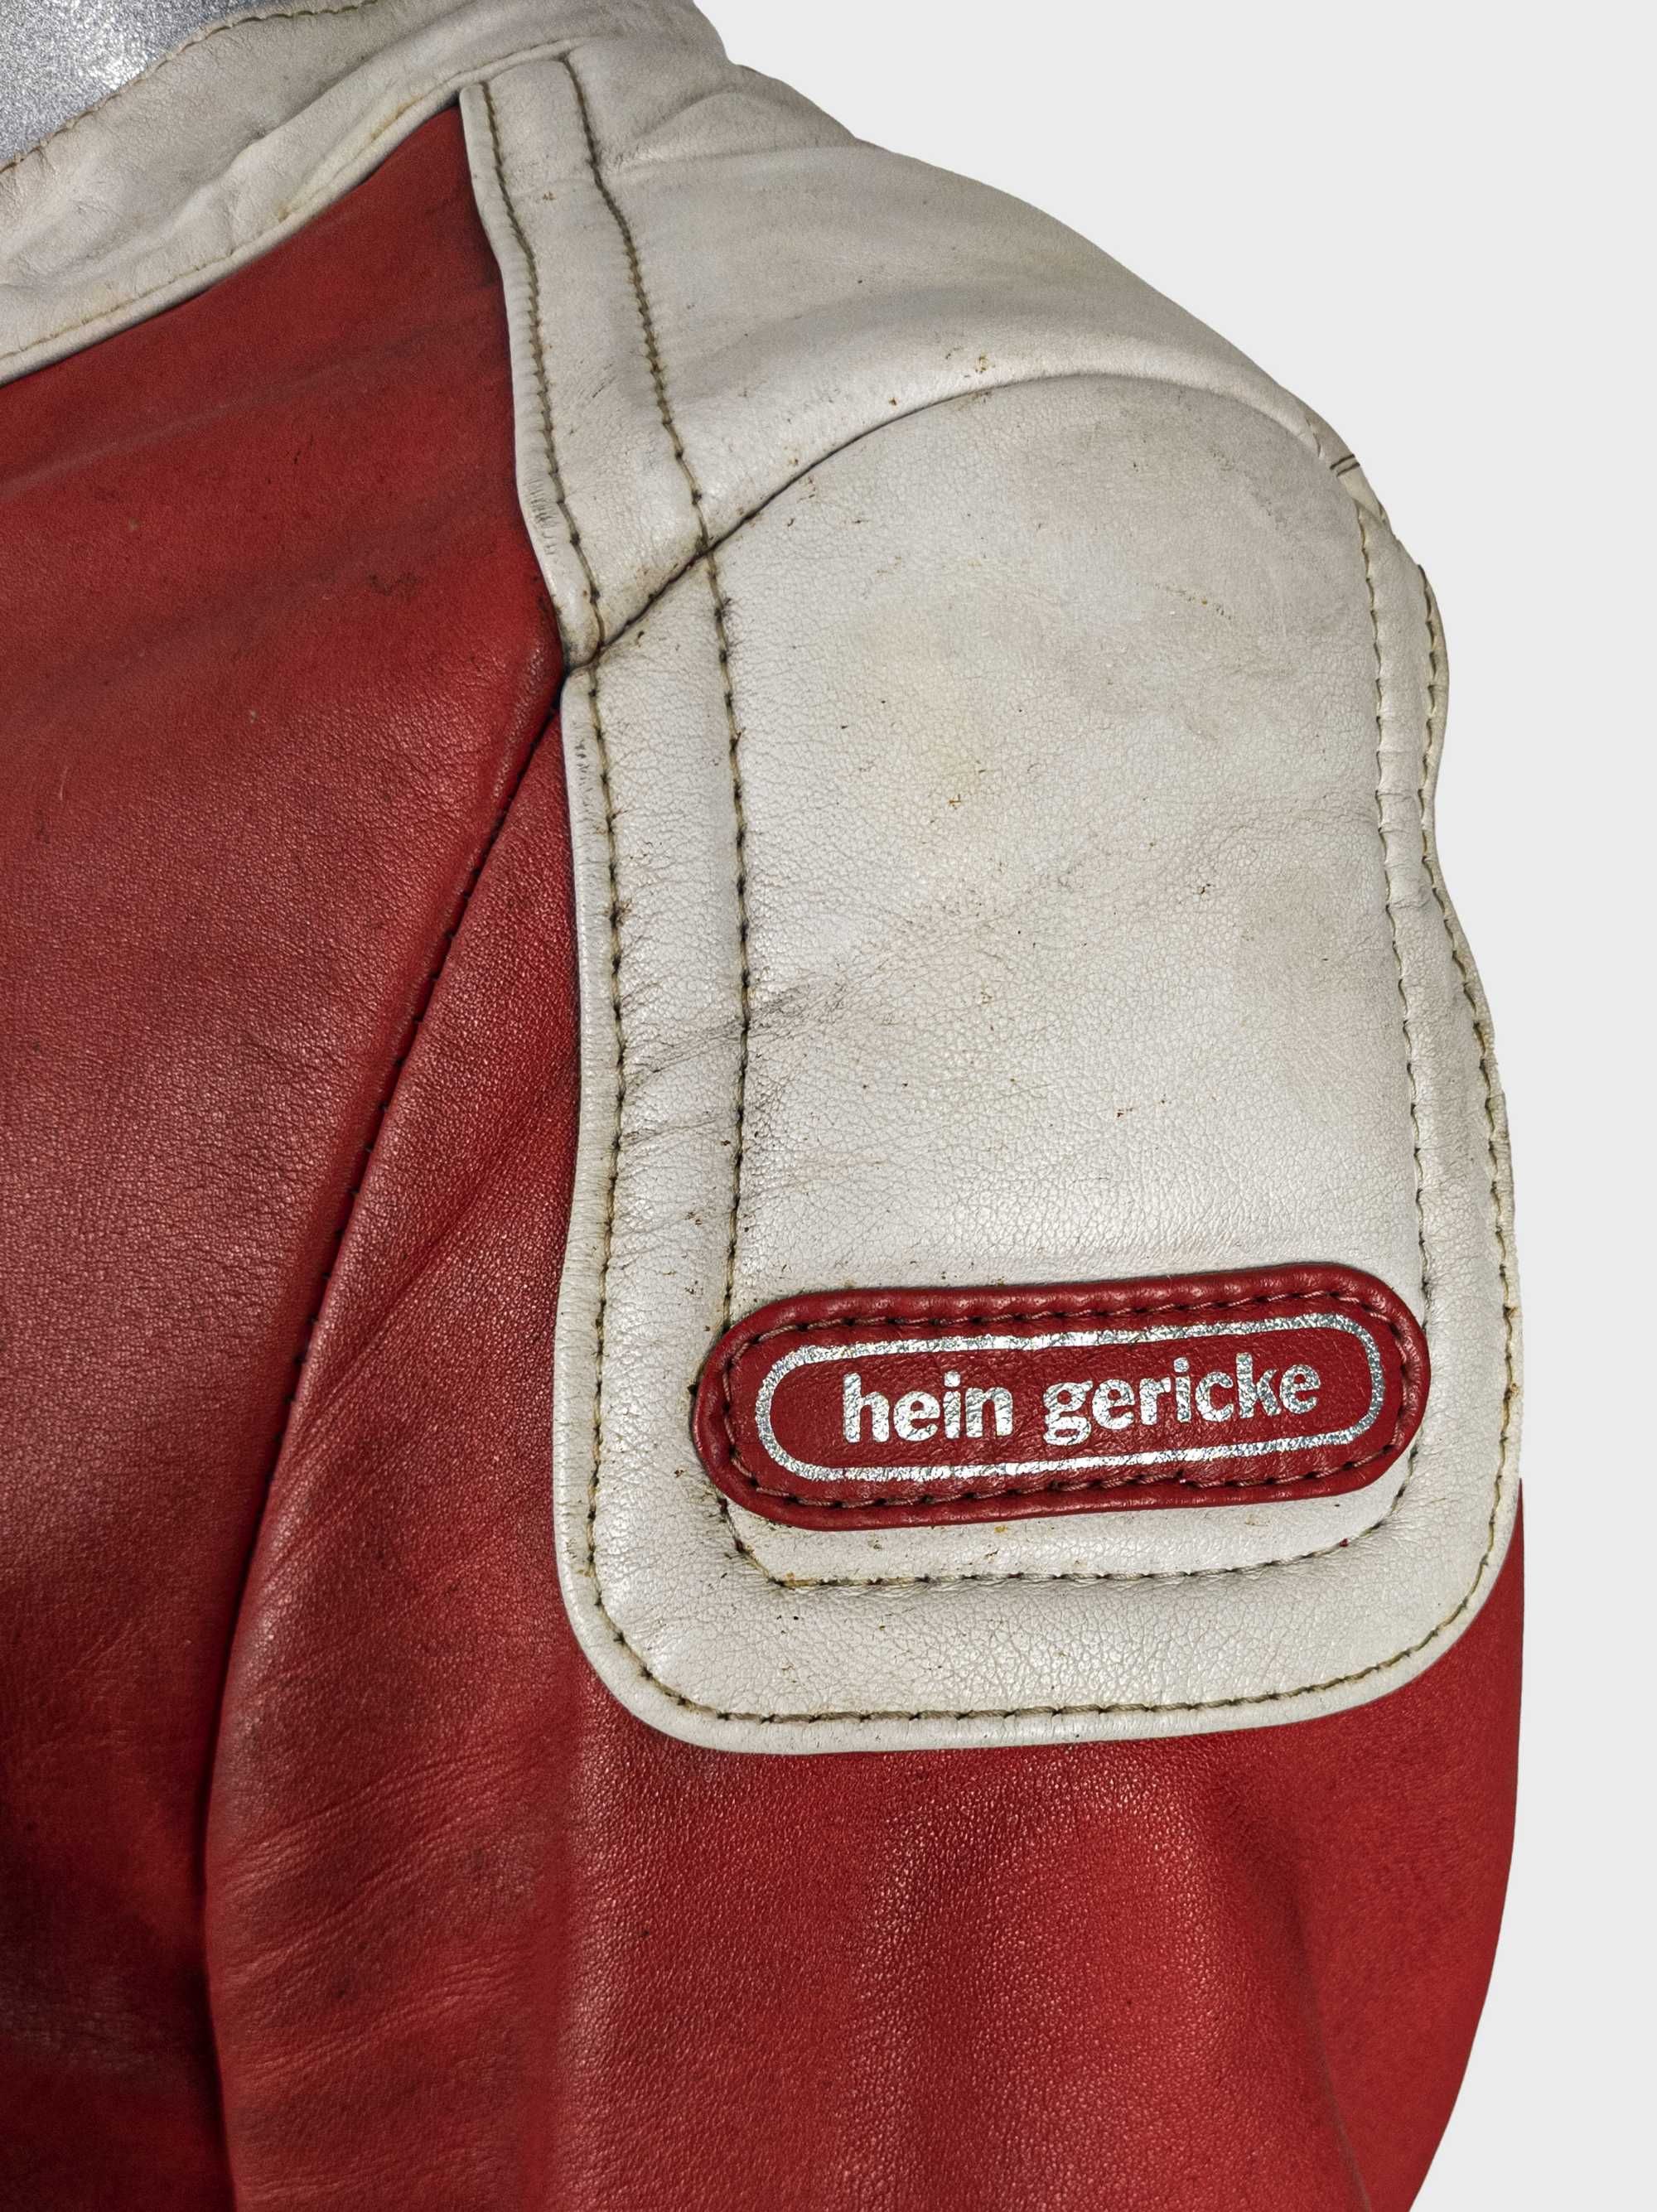 Hein gericke винтажная вишневая байкерская куртка 1980-х годов